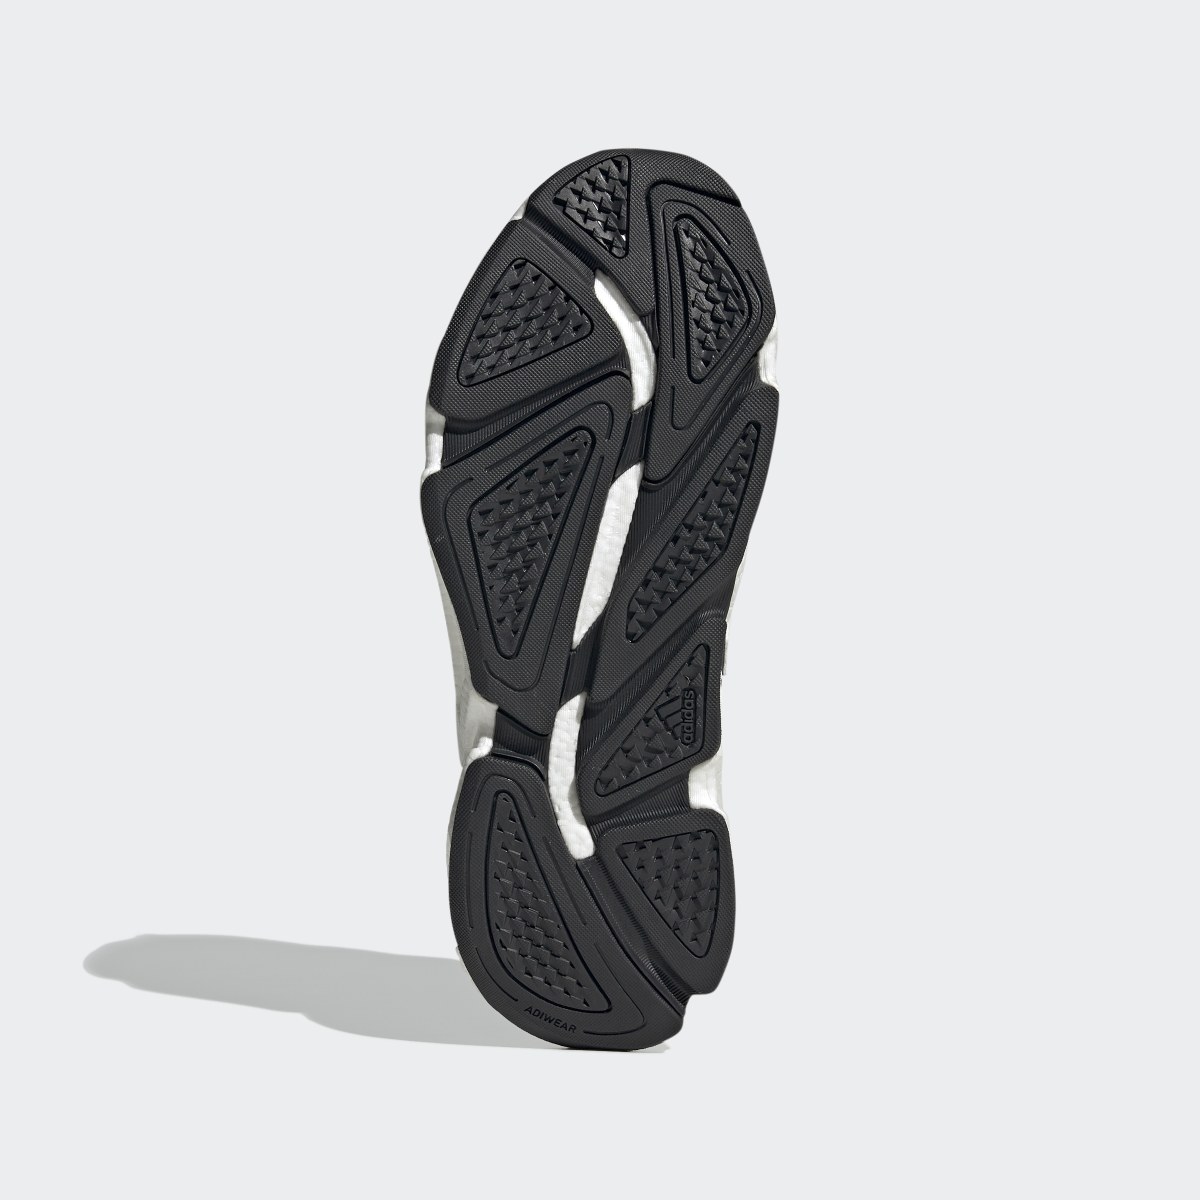 Adidas Chaussure Karlie Kloss X9000. 4